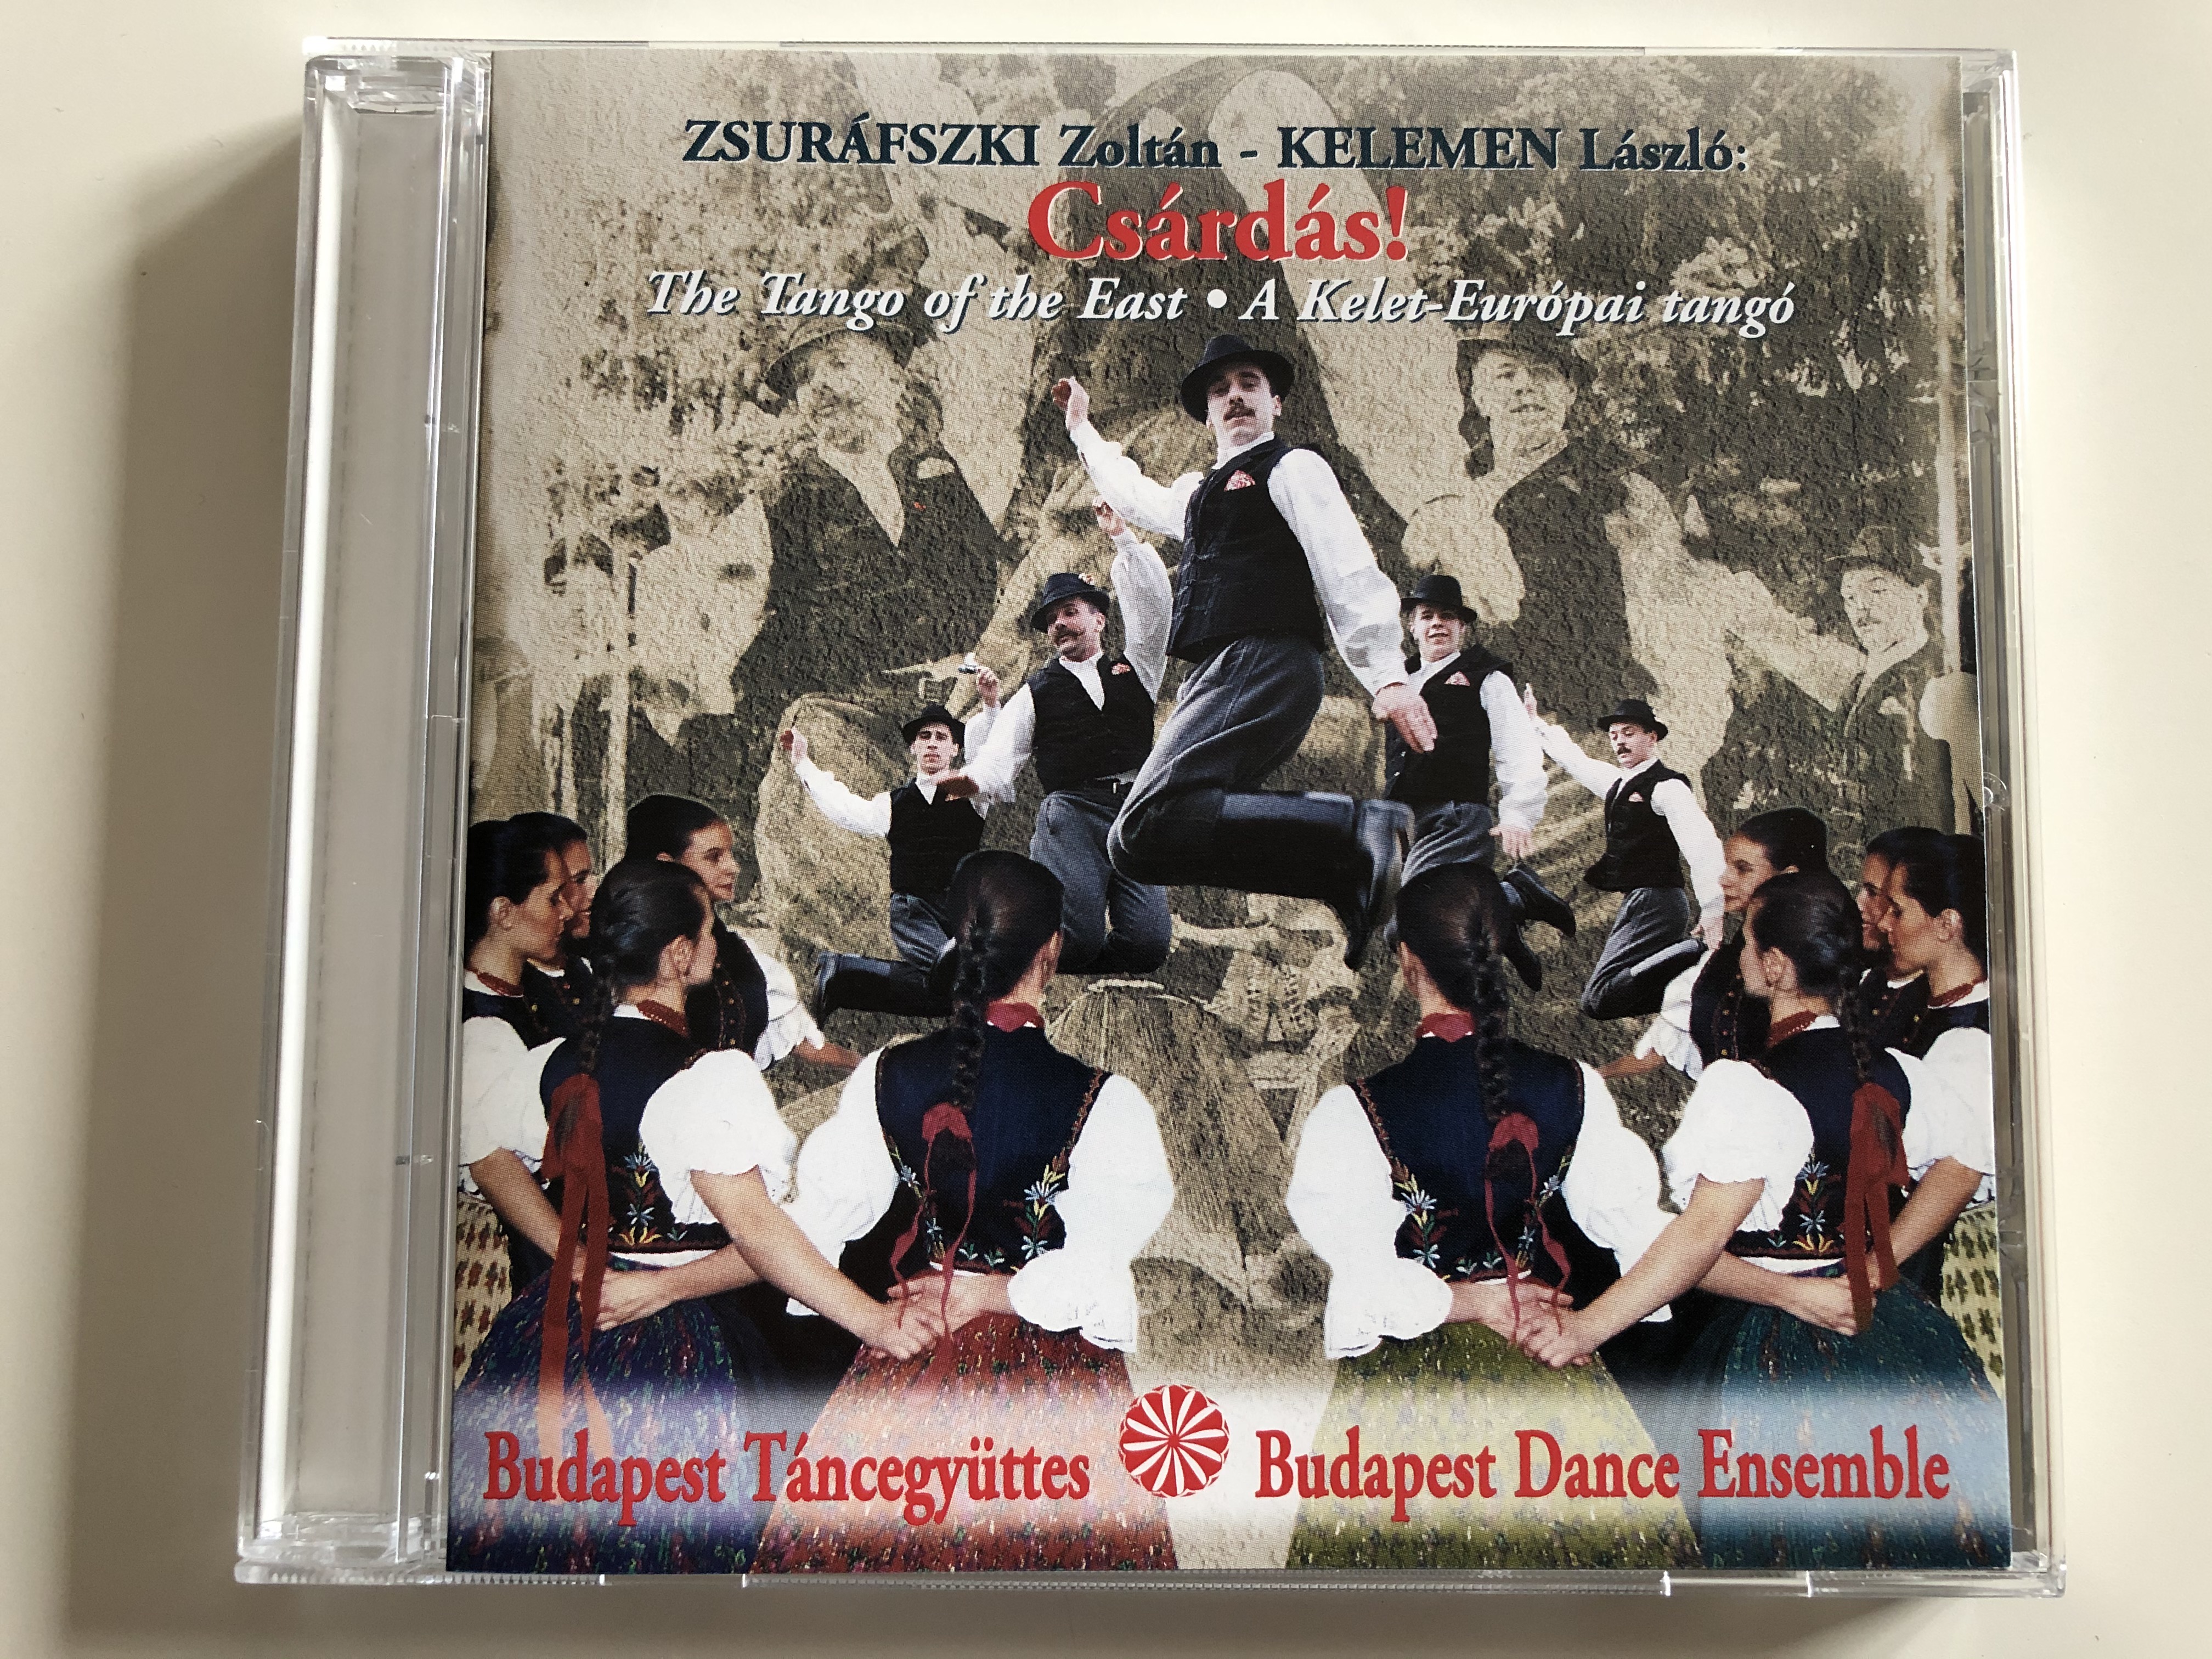 zsurfszki-zoltan-kelemen-laszlo-cs-rd-s-the-tango-of-the-east-a-kelet-eur-pai-tang-budapest-dance-ensemble-budapest-t-ncegy-ttes-audio-cd-1999-bpte001-1-.jpg